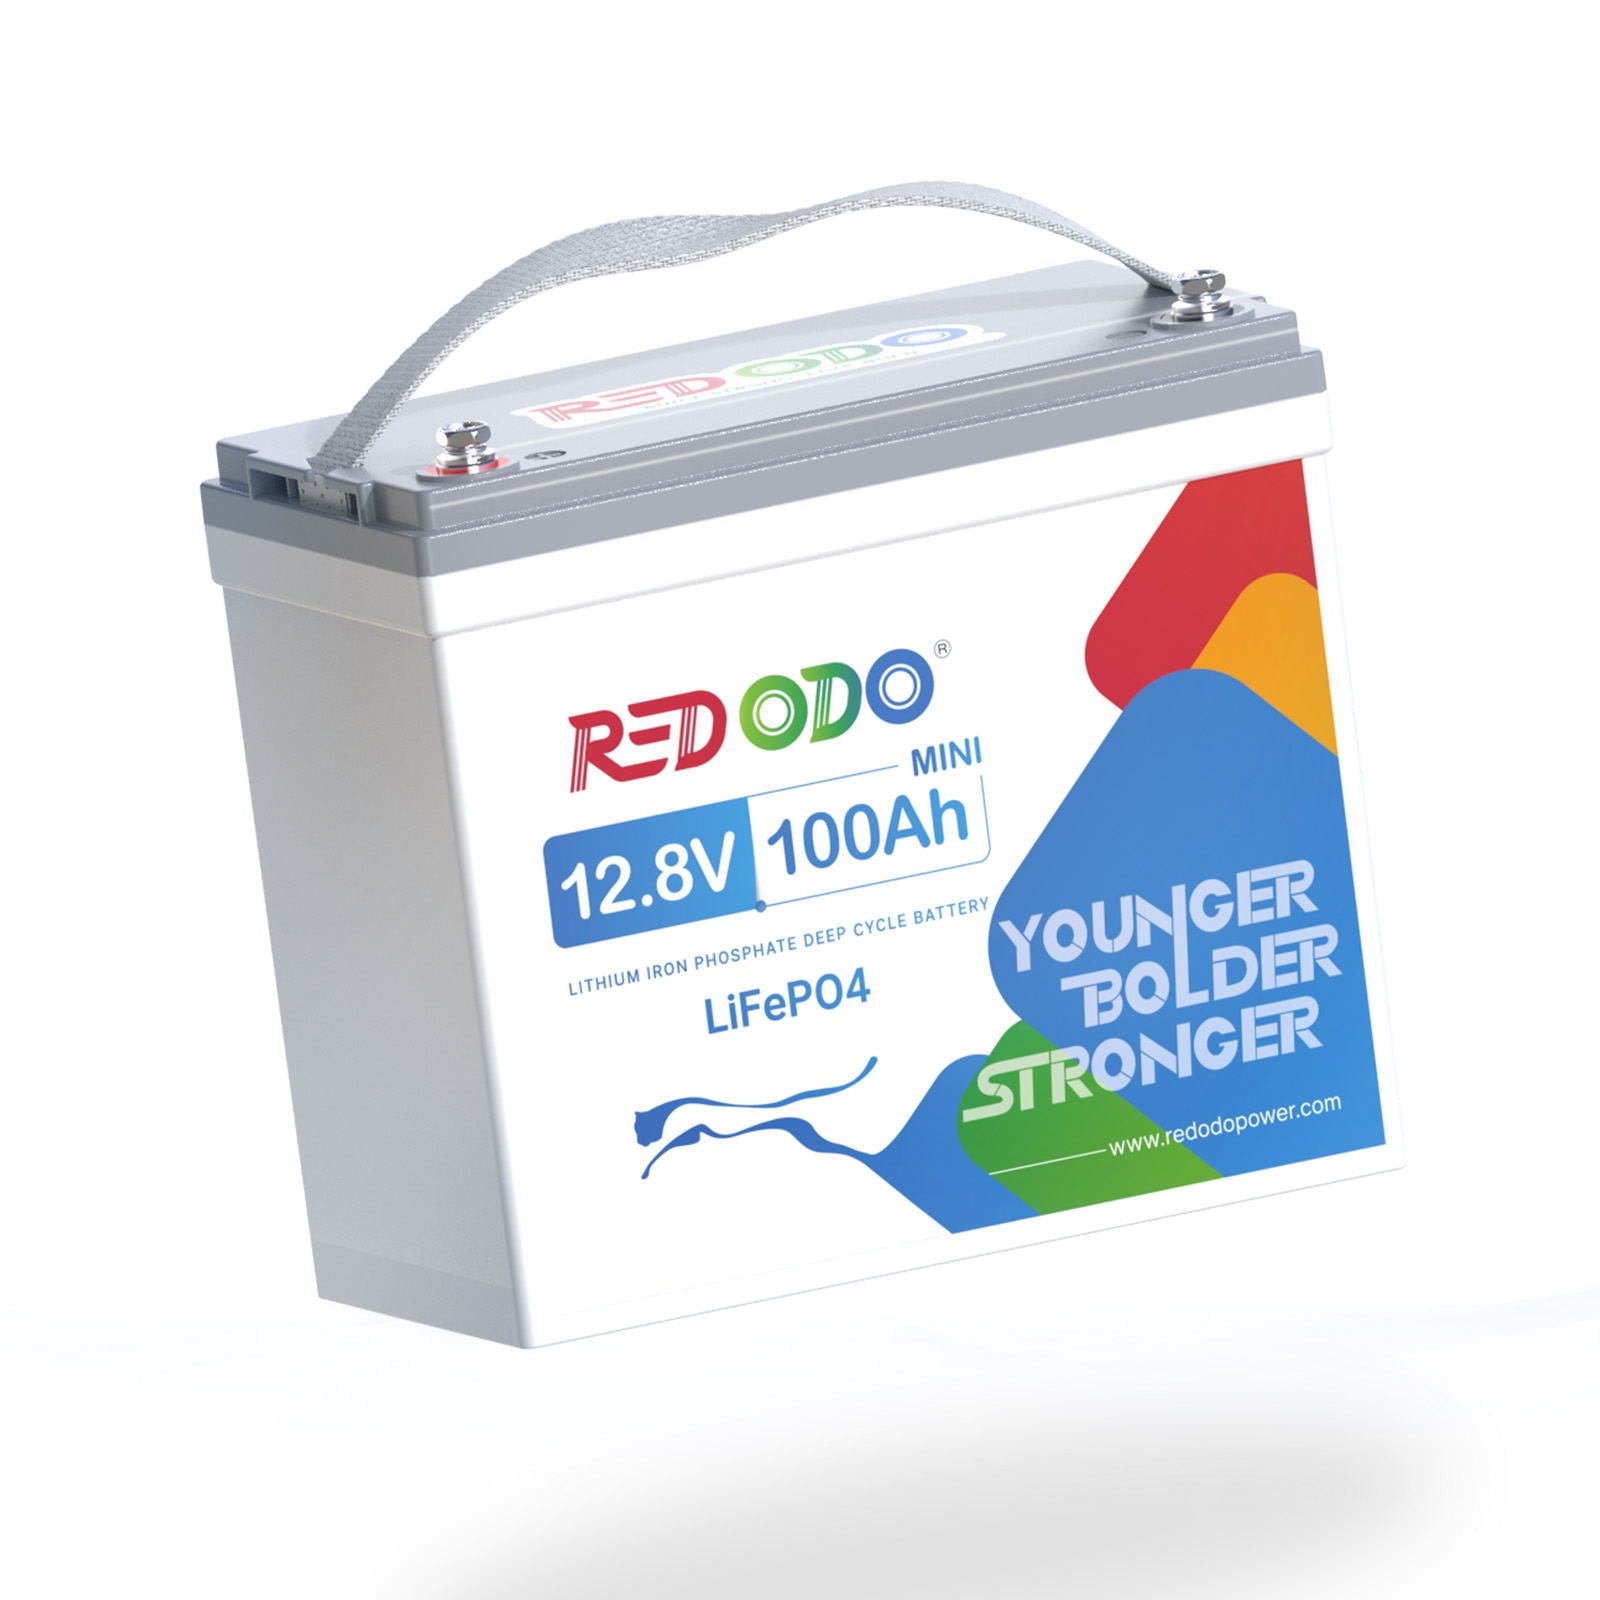 Redodo 12V 100Ah Mini LiFePO4 Battery | 1.28kWh & 1.28kW, One